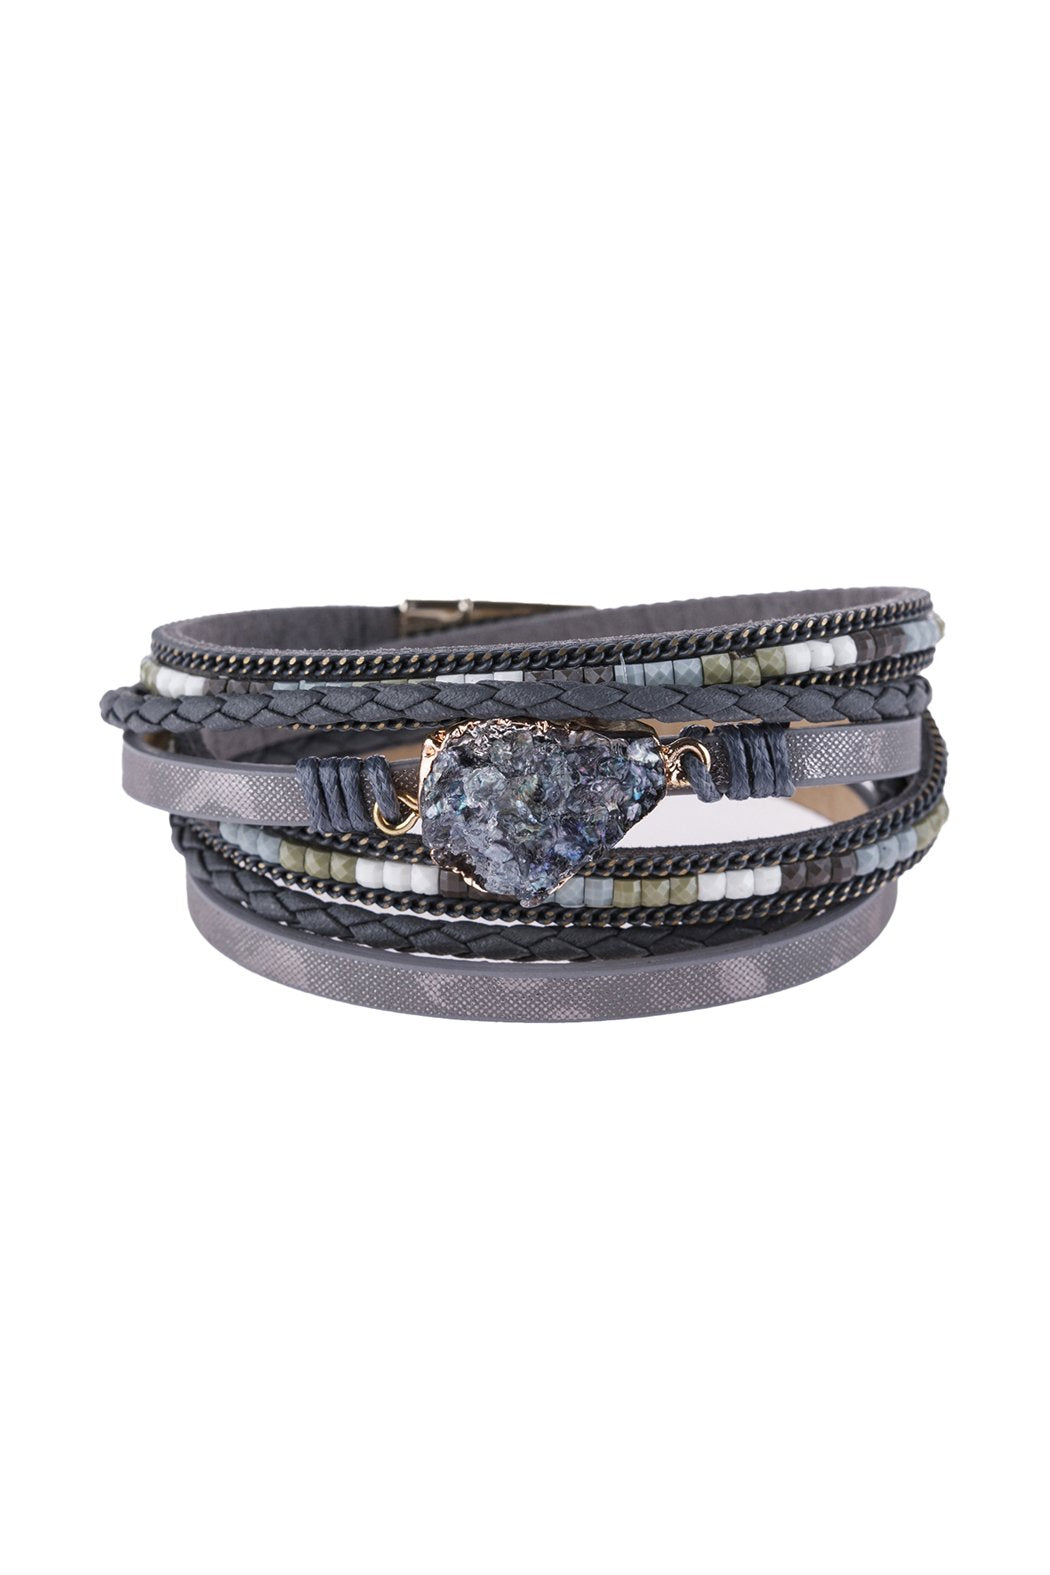 Hdb2981 - Druzy Stone Leather Wrap Magnetic Bracelet - LOLA LUXE